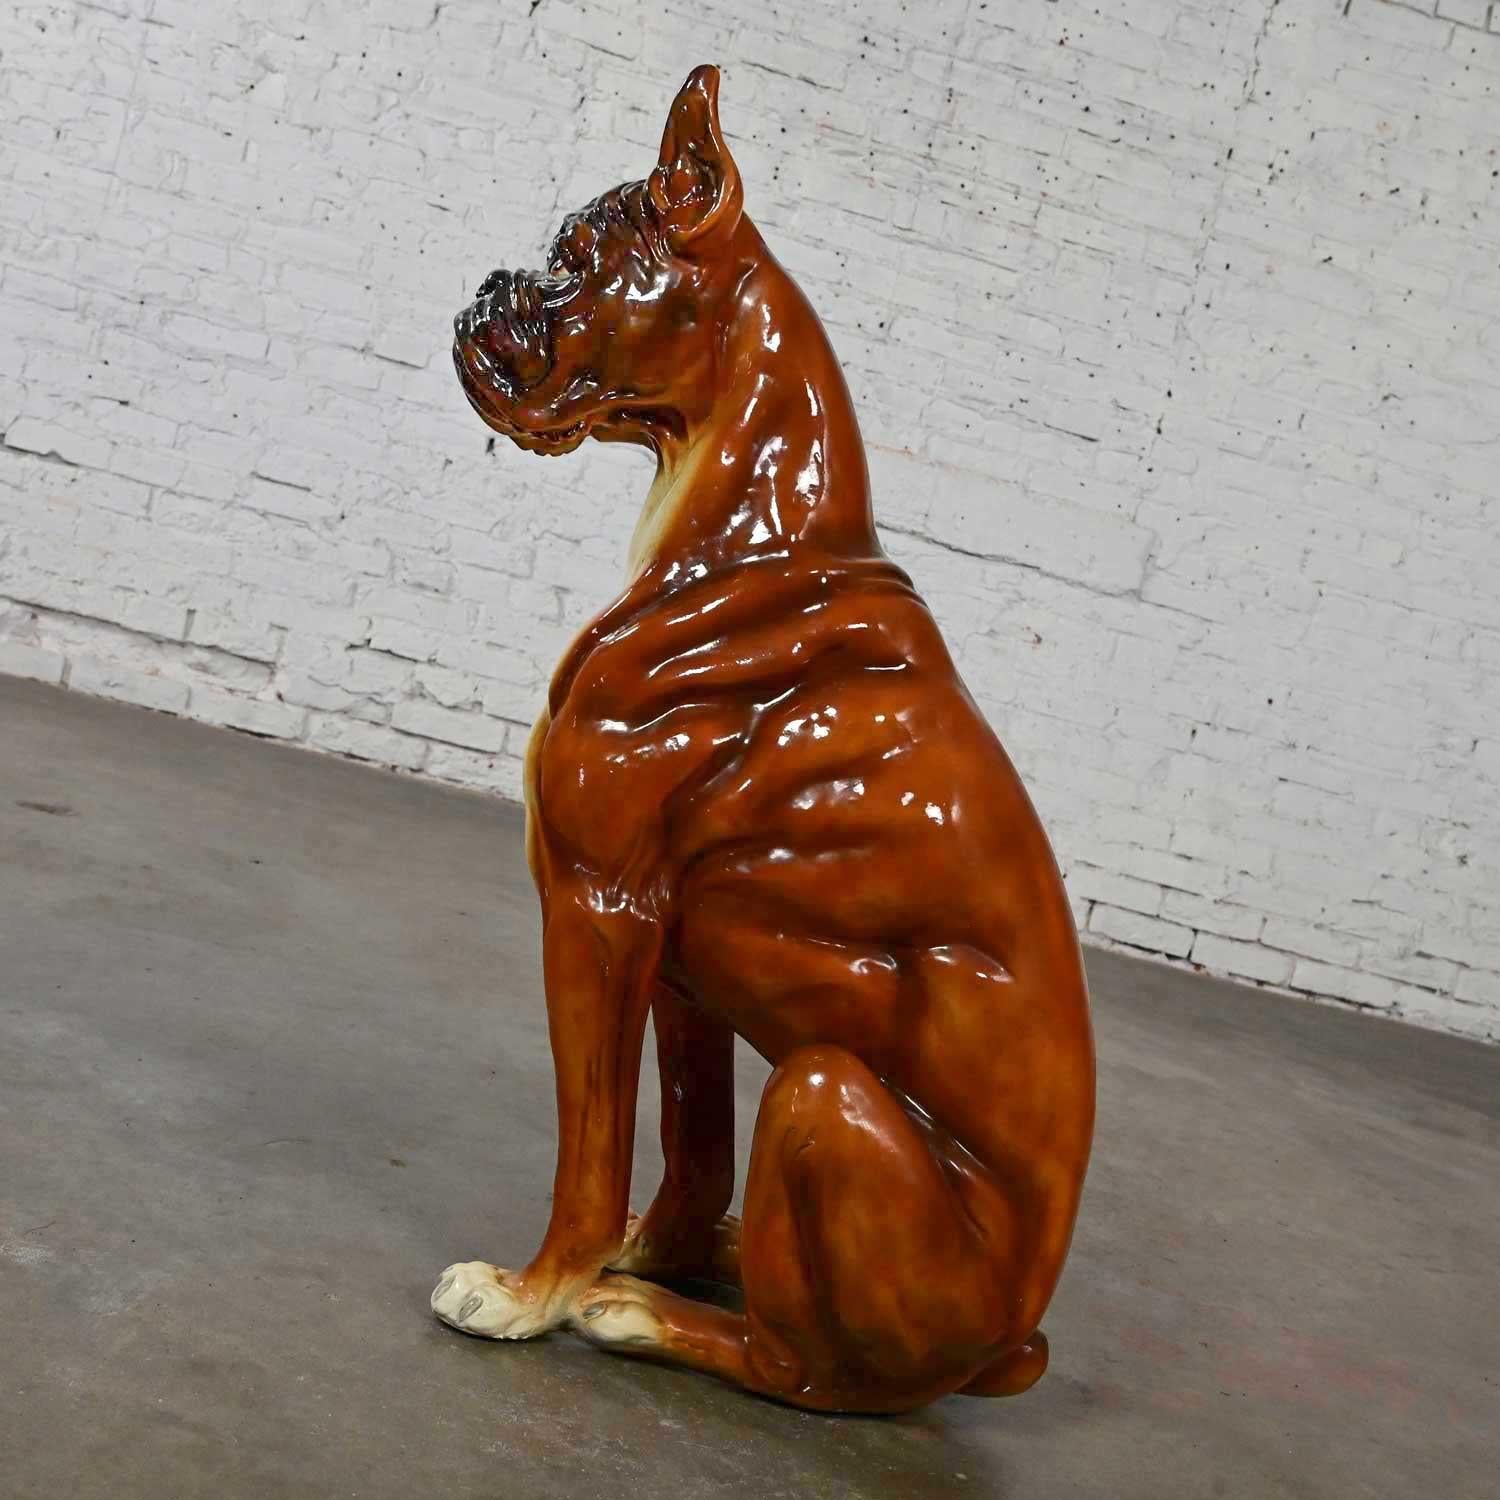 boxer dog statue life size